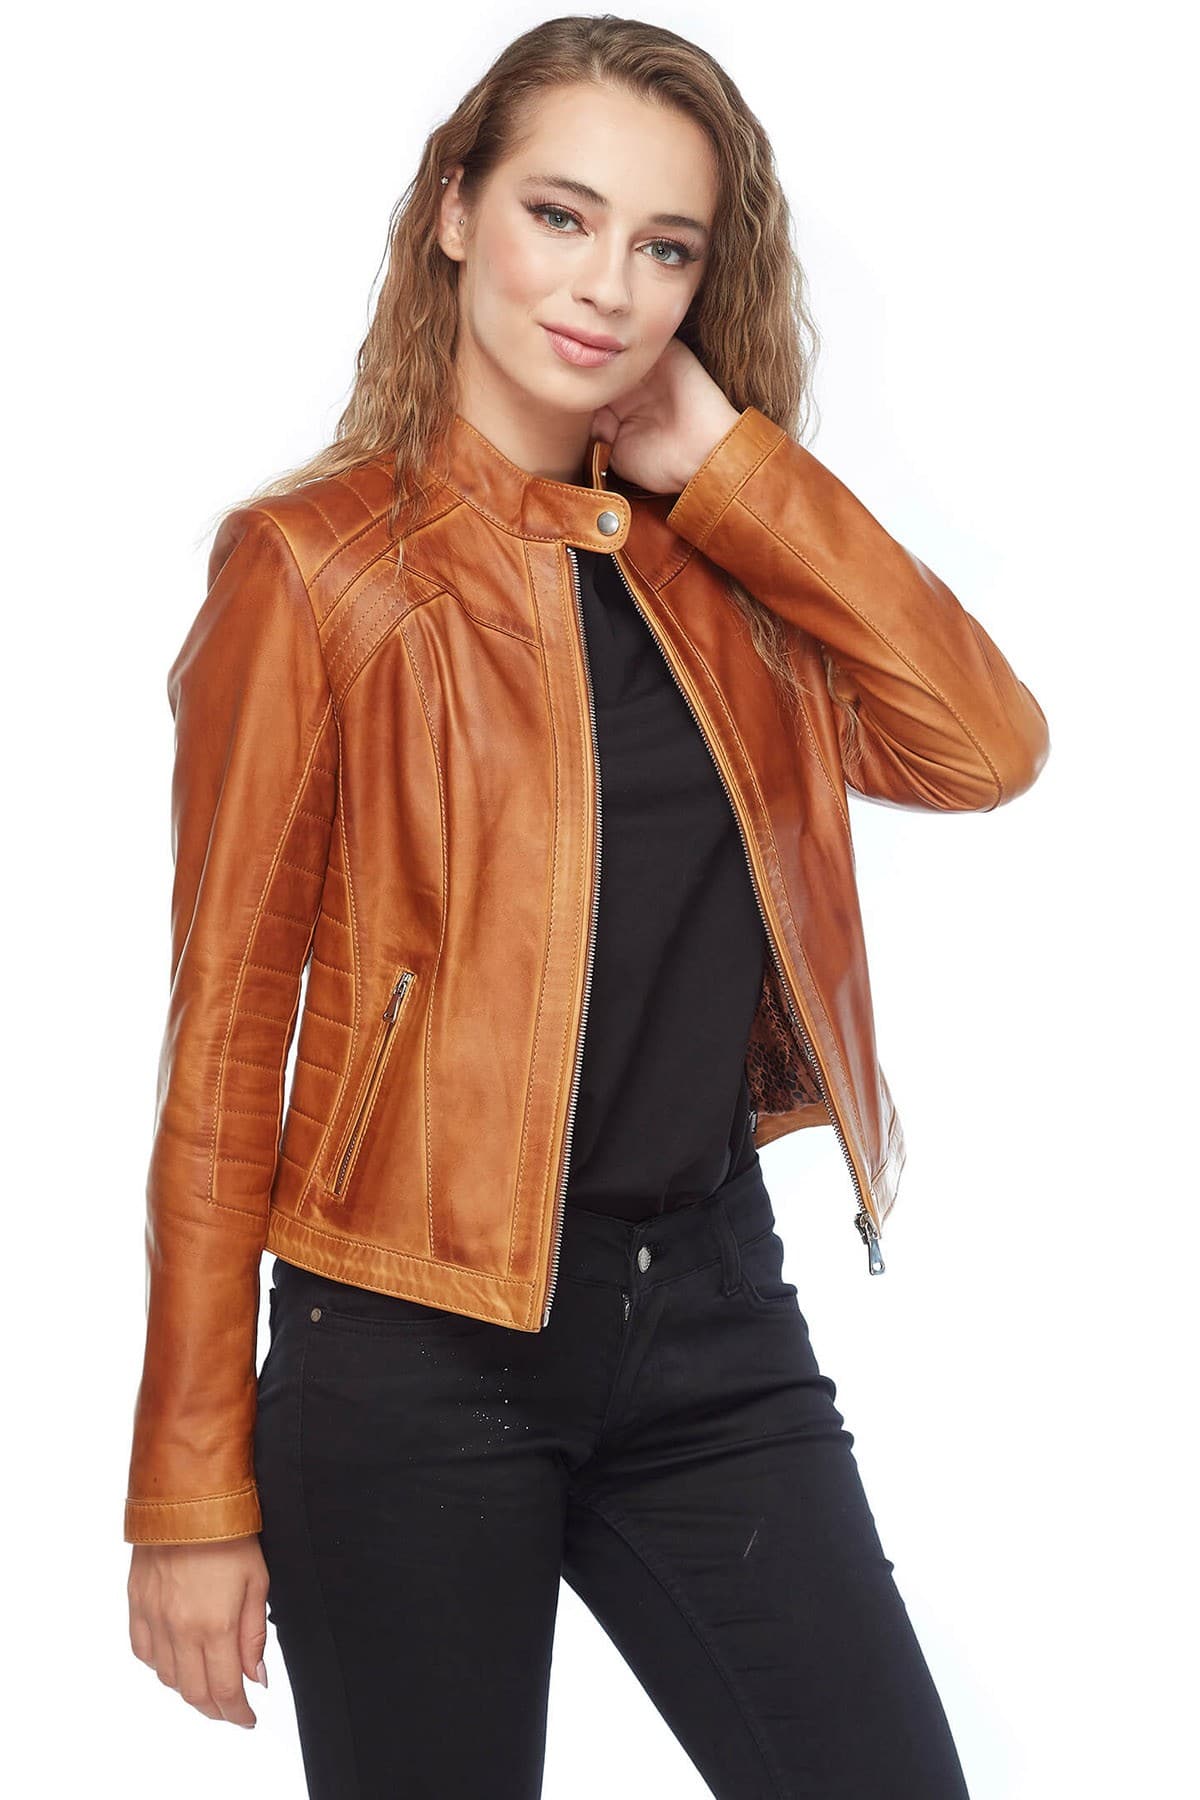 Millie Brady Waxed Brown Leather Jacket3